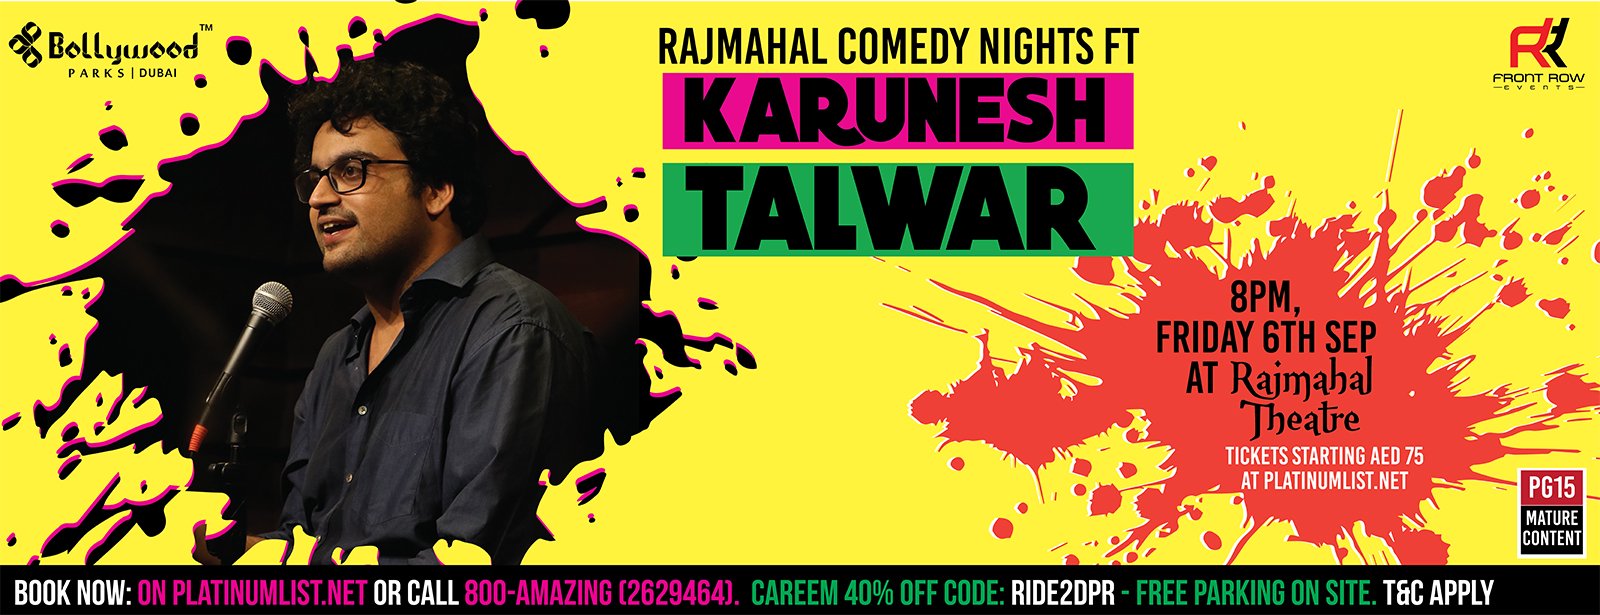 Rajmahal Comedy Nights with Karunesh Talwar - Coming Soon in UAE